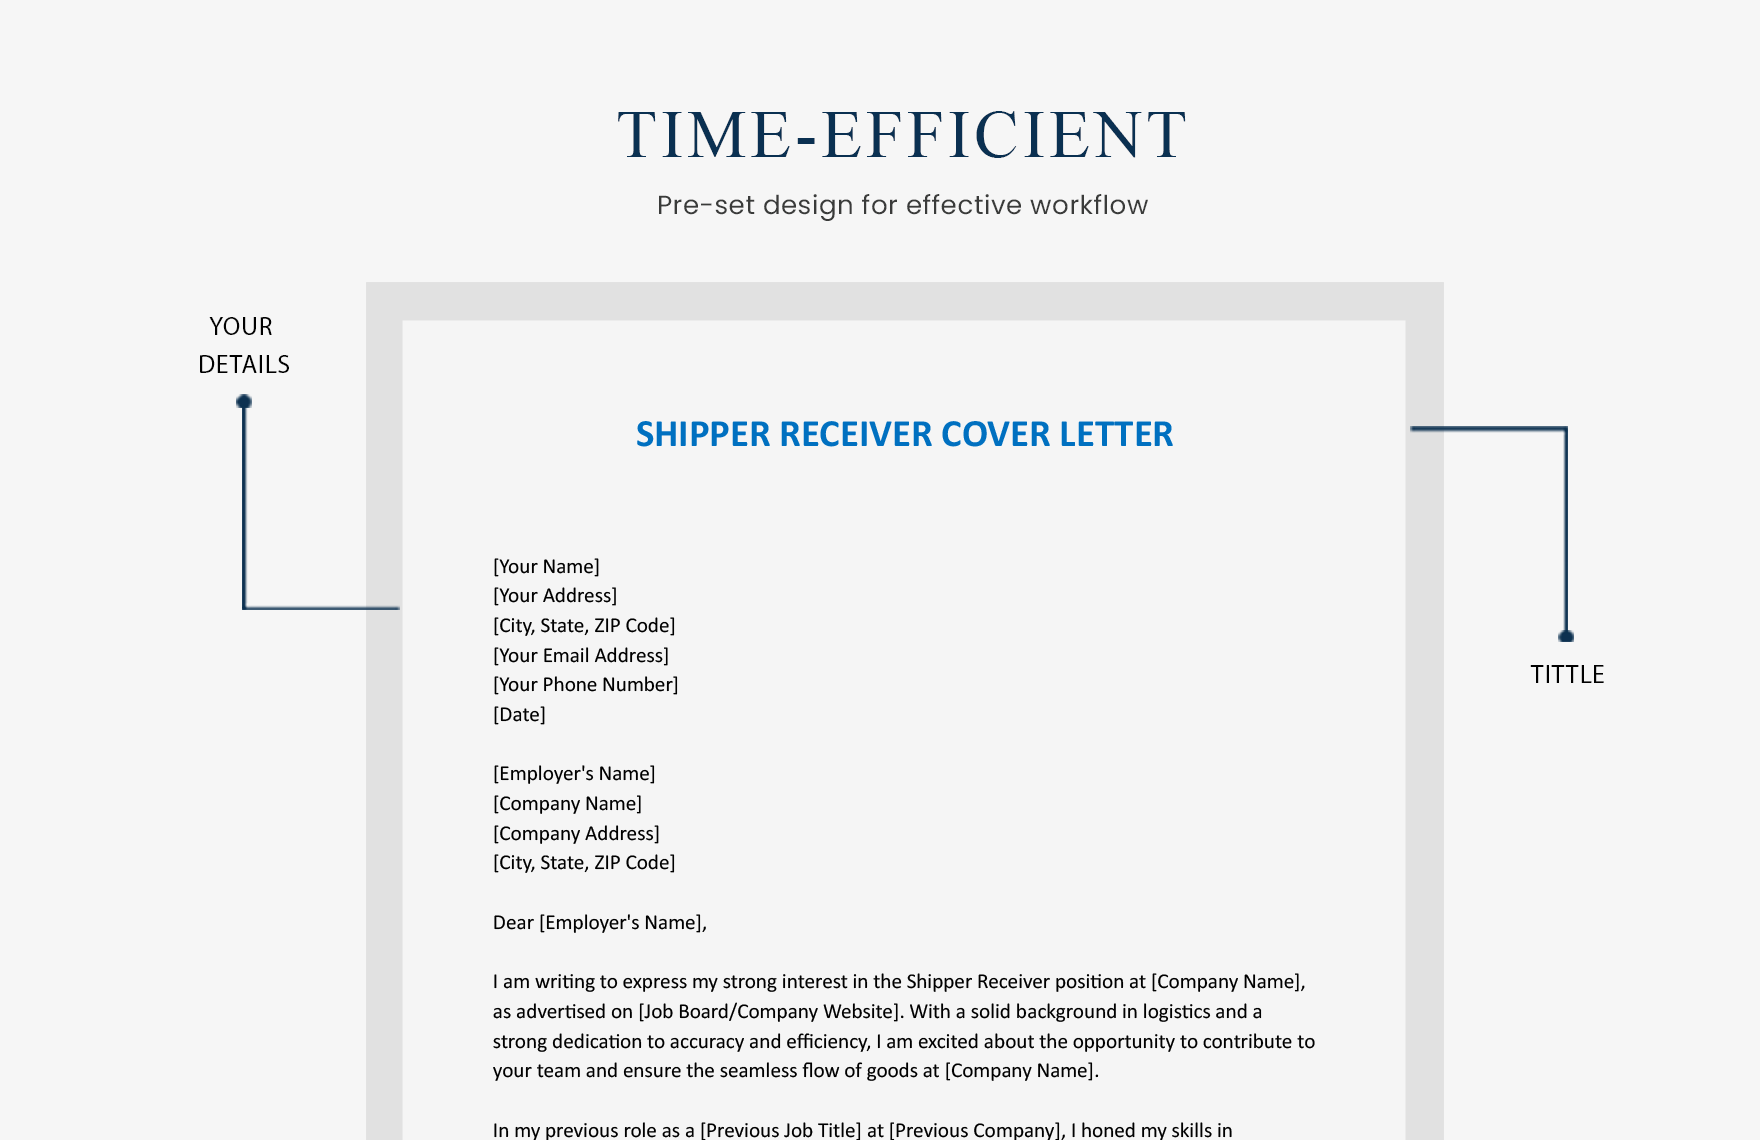 Shipper Receiver Cover Letter